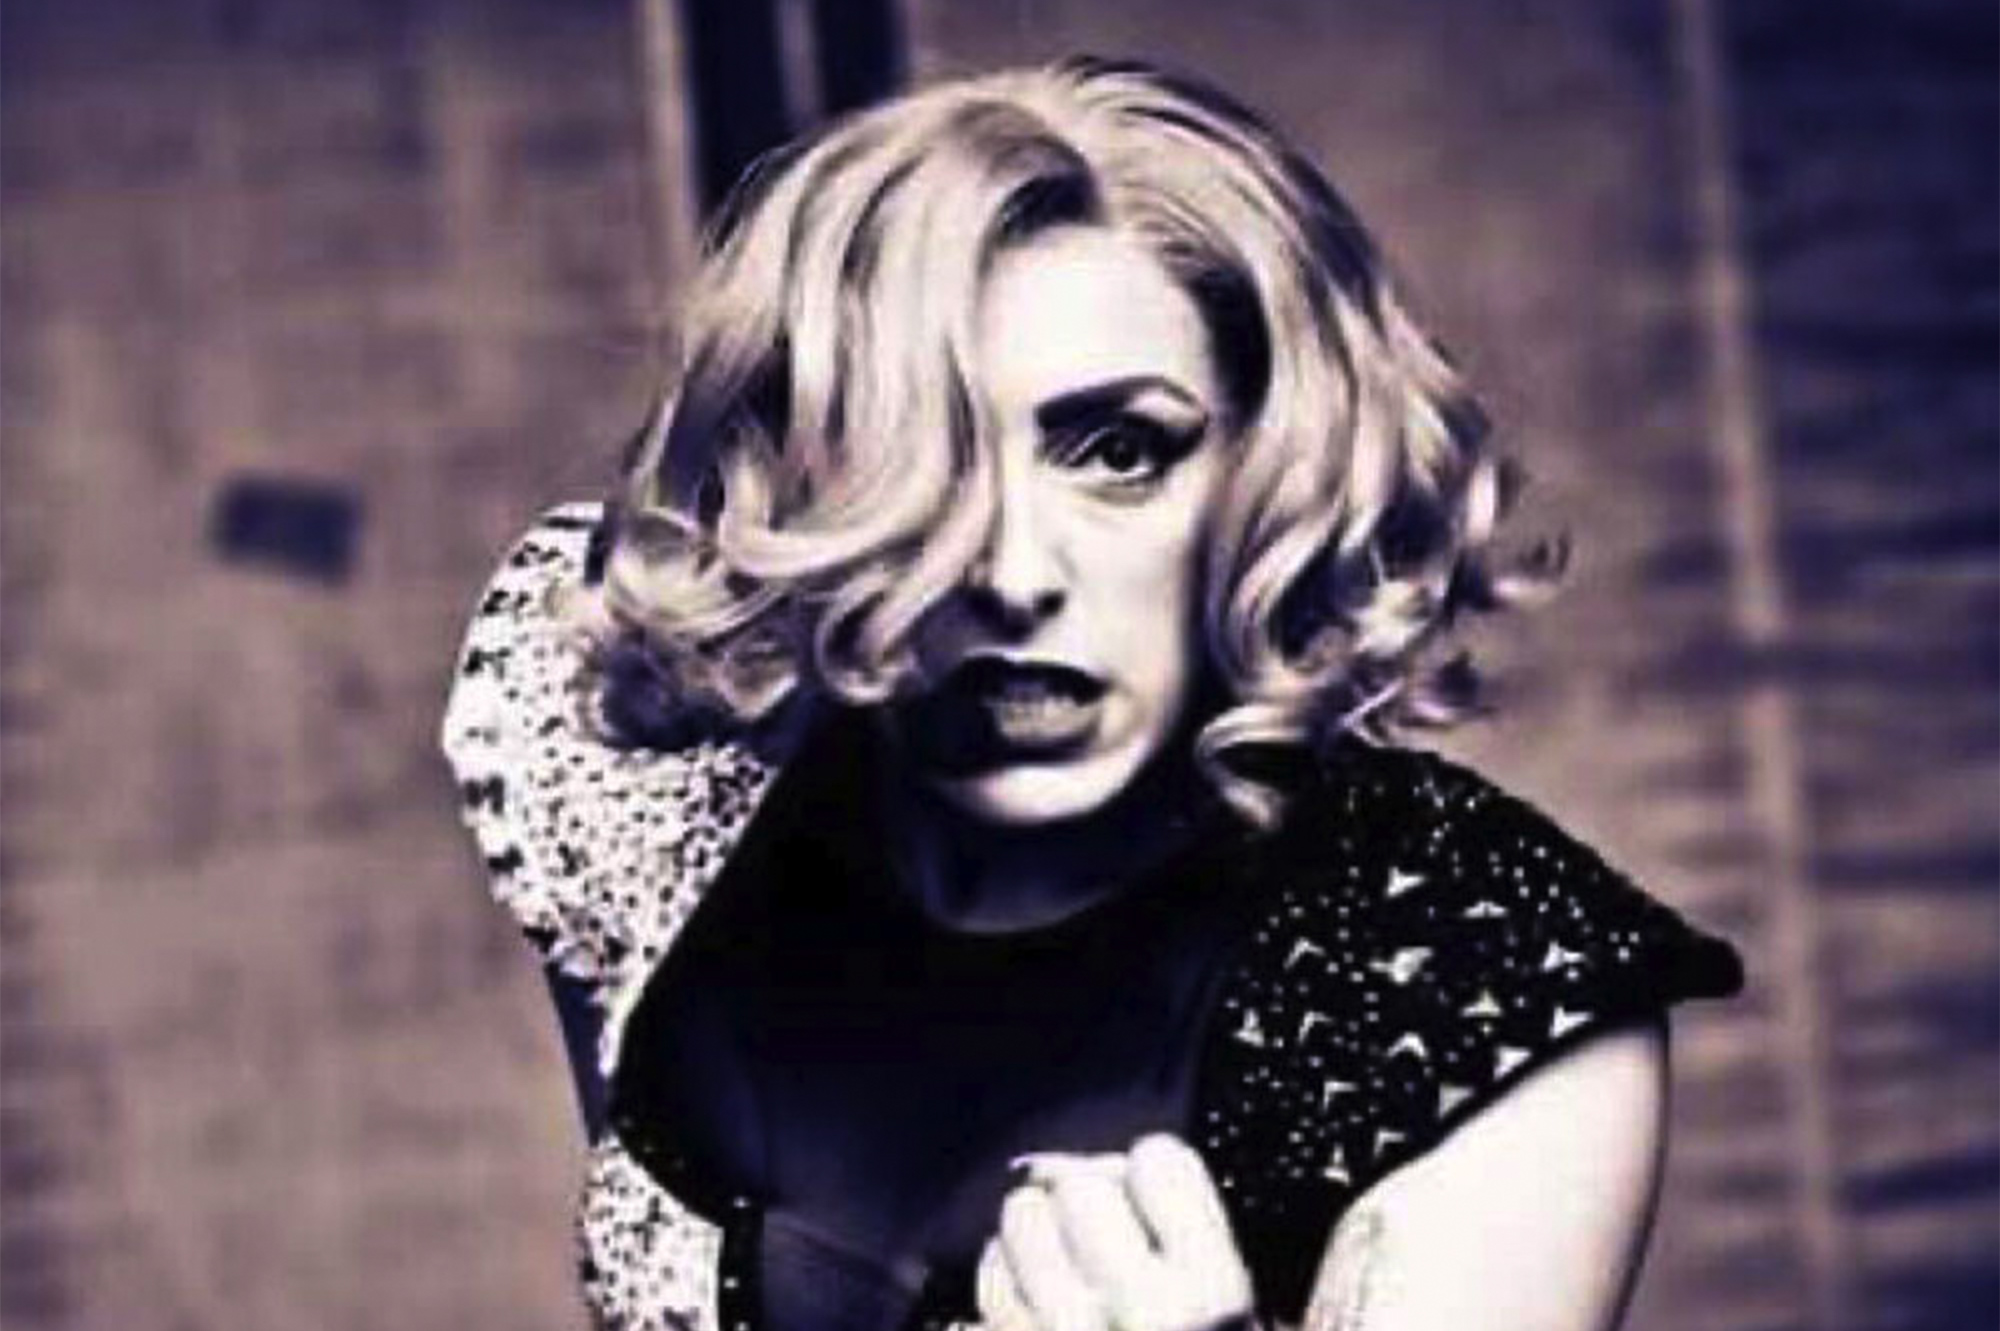 Donna Maria as Lady Gaga